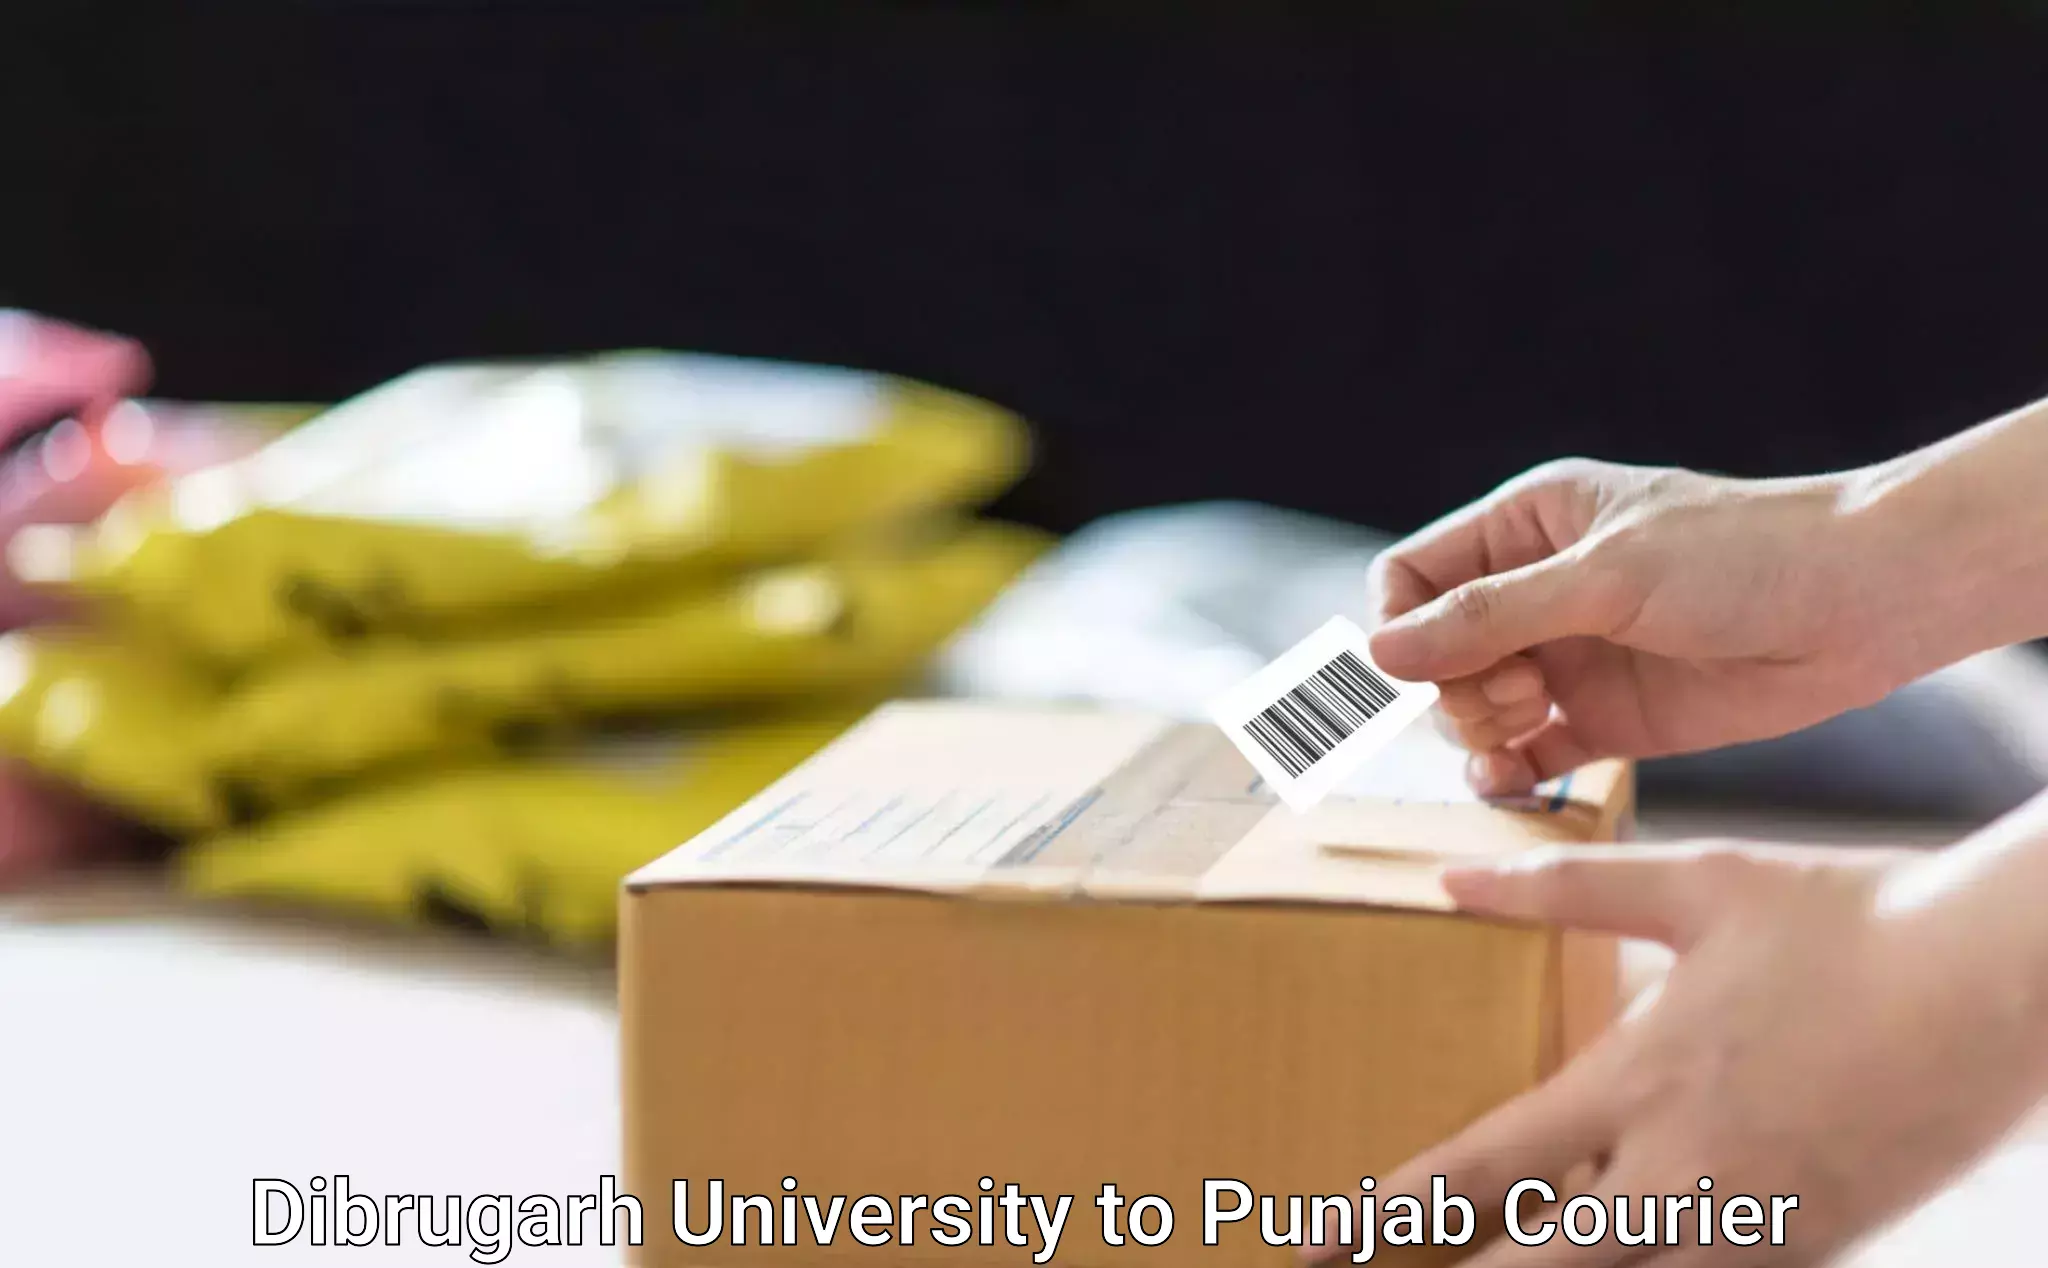 Courier service partnerships Dibrugarh University to Ludhiana